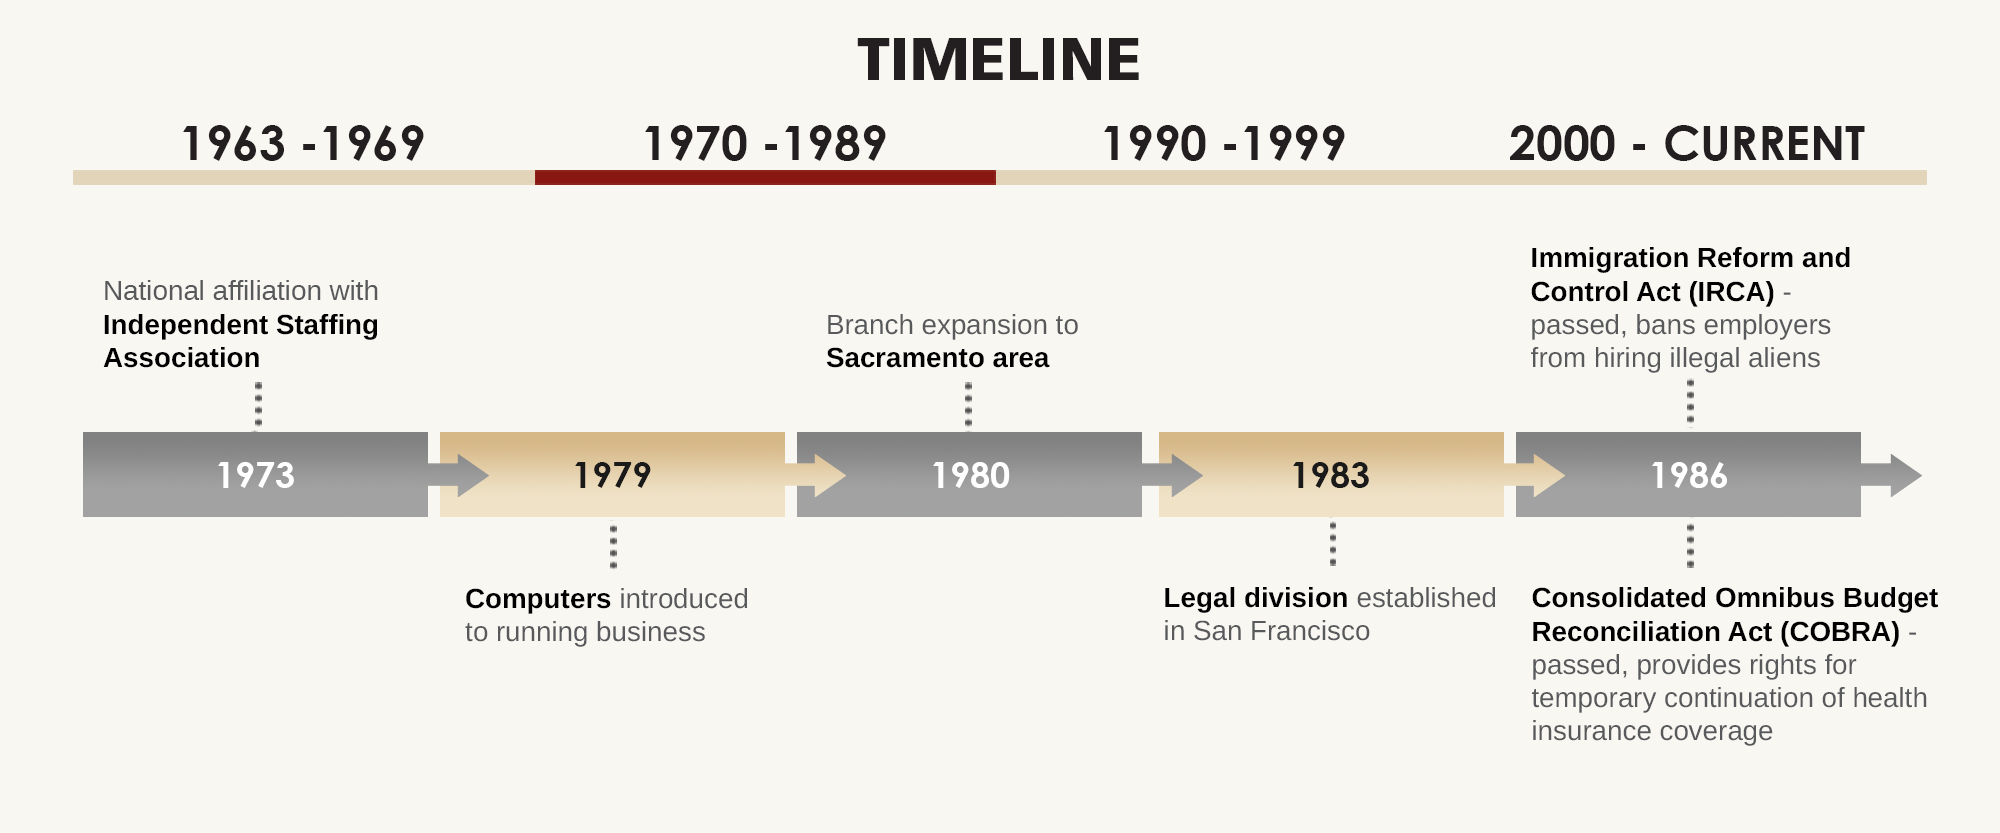 Certified Timeline 1979-1990